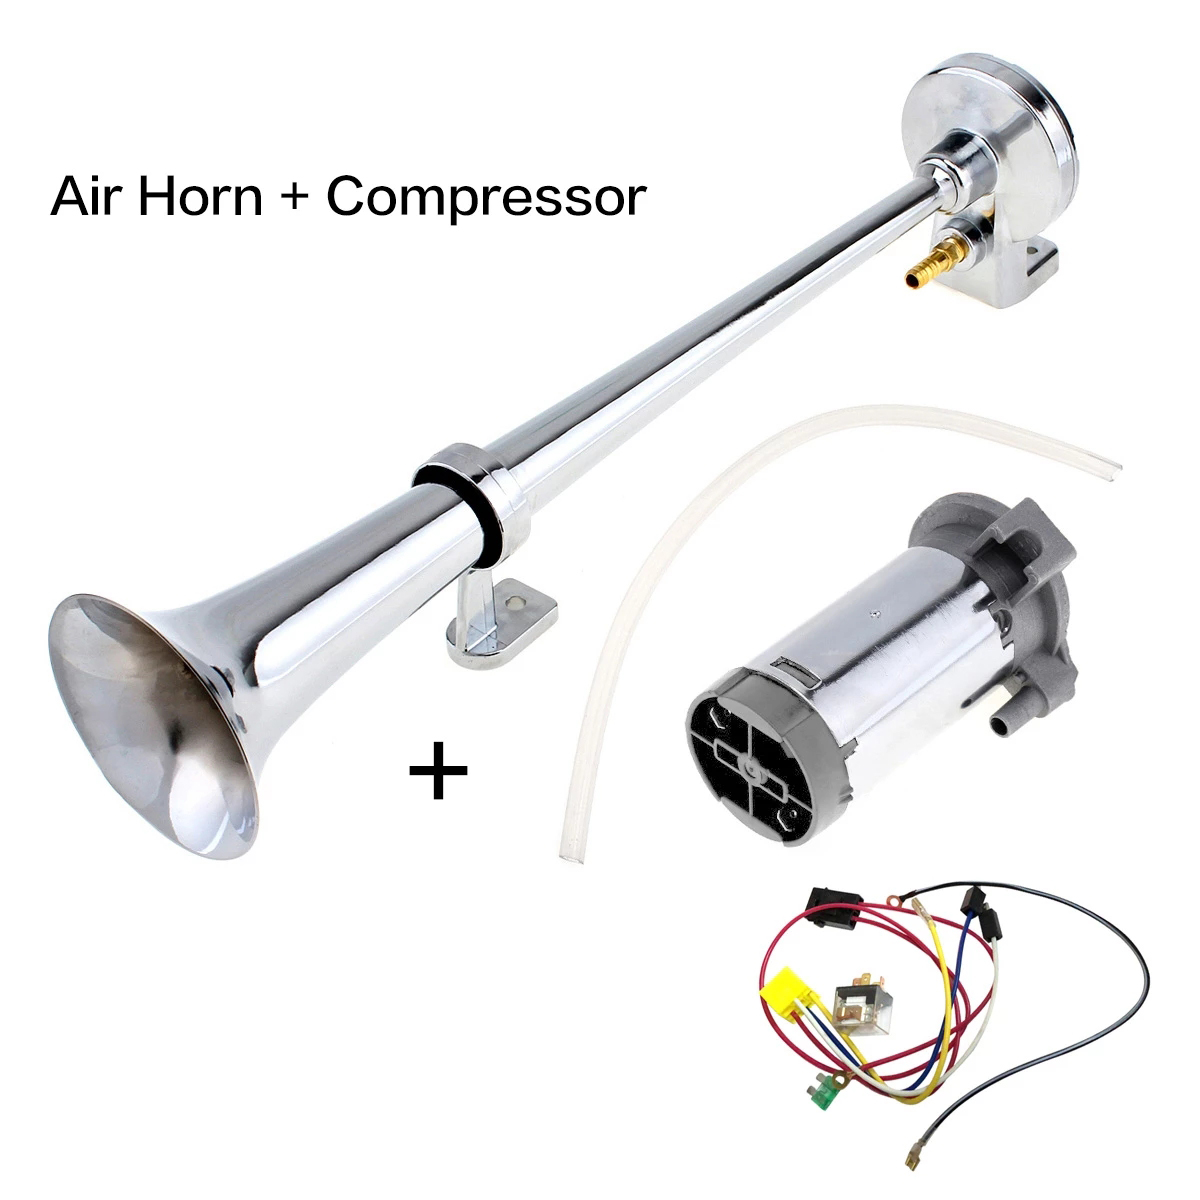 Universal 17inch Single Trumpet Car Air Horn 12V Compressor 150DB Super Loud  Air Hose Car Horn